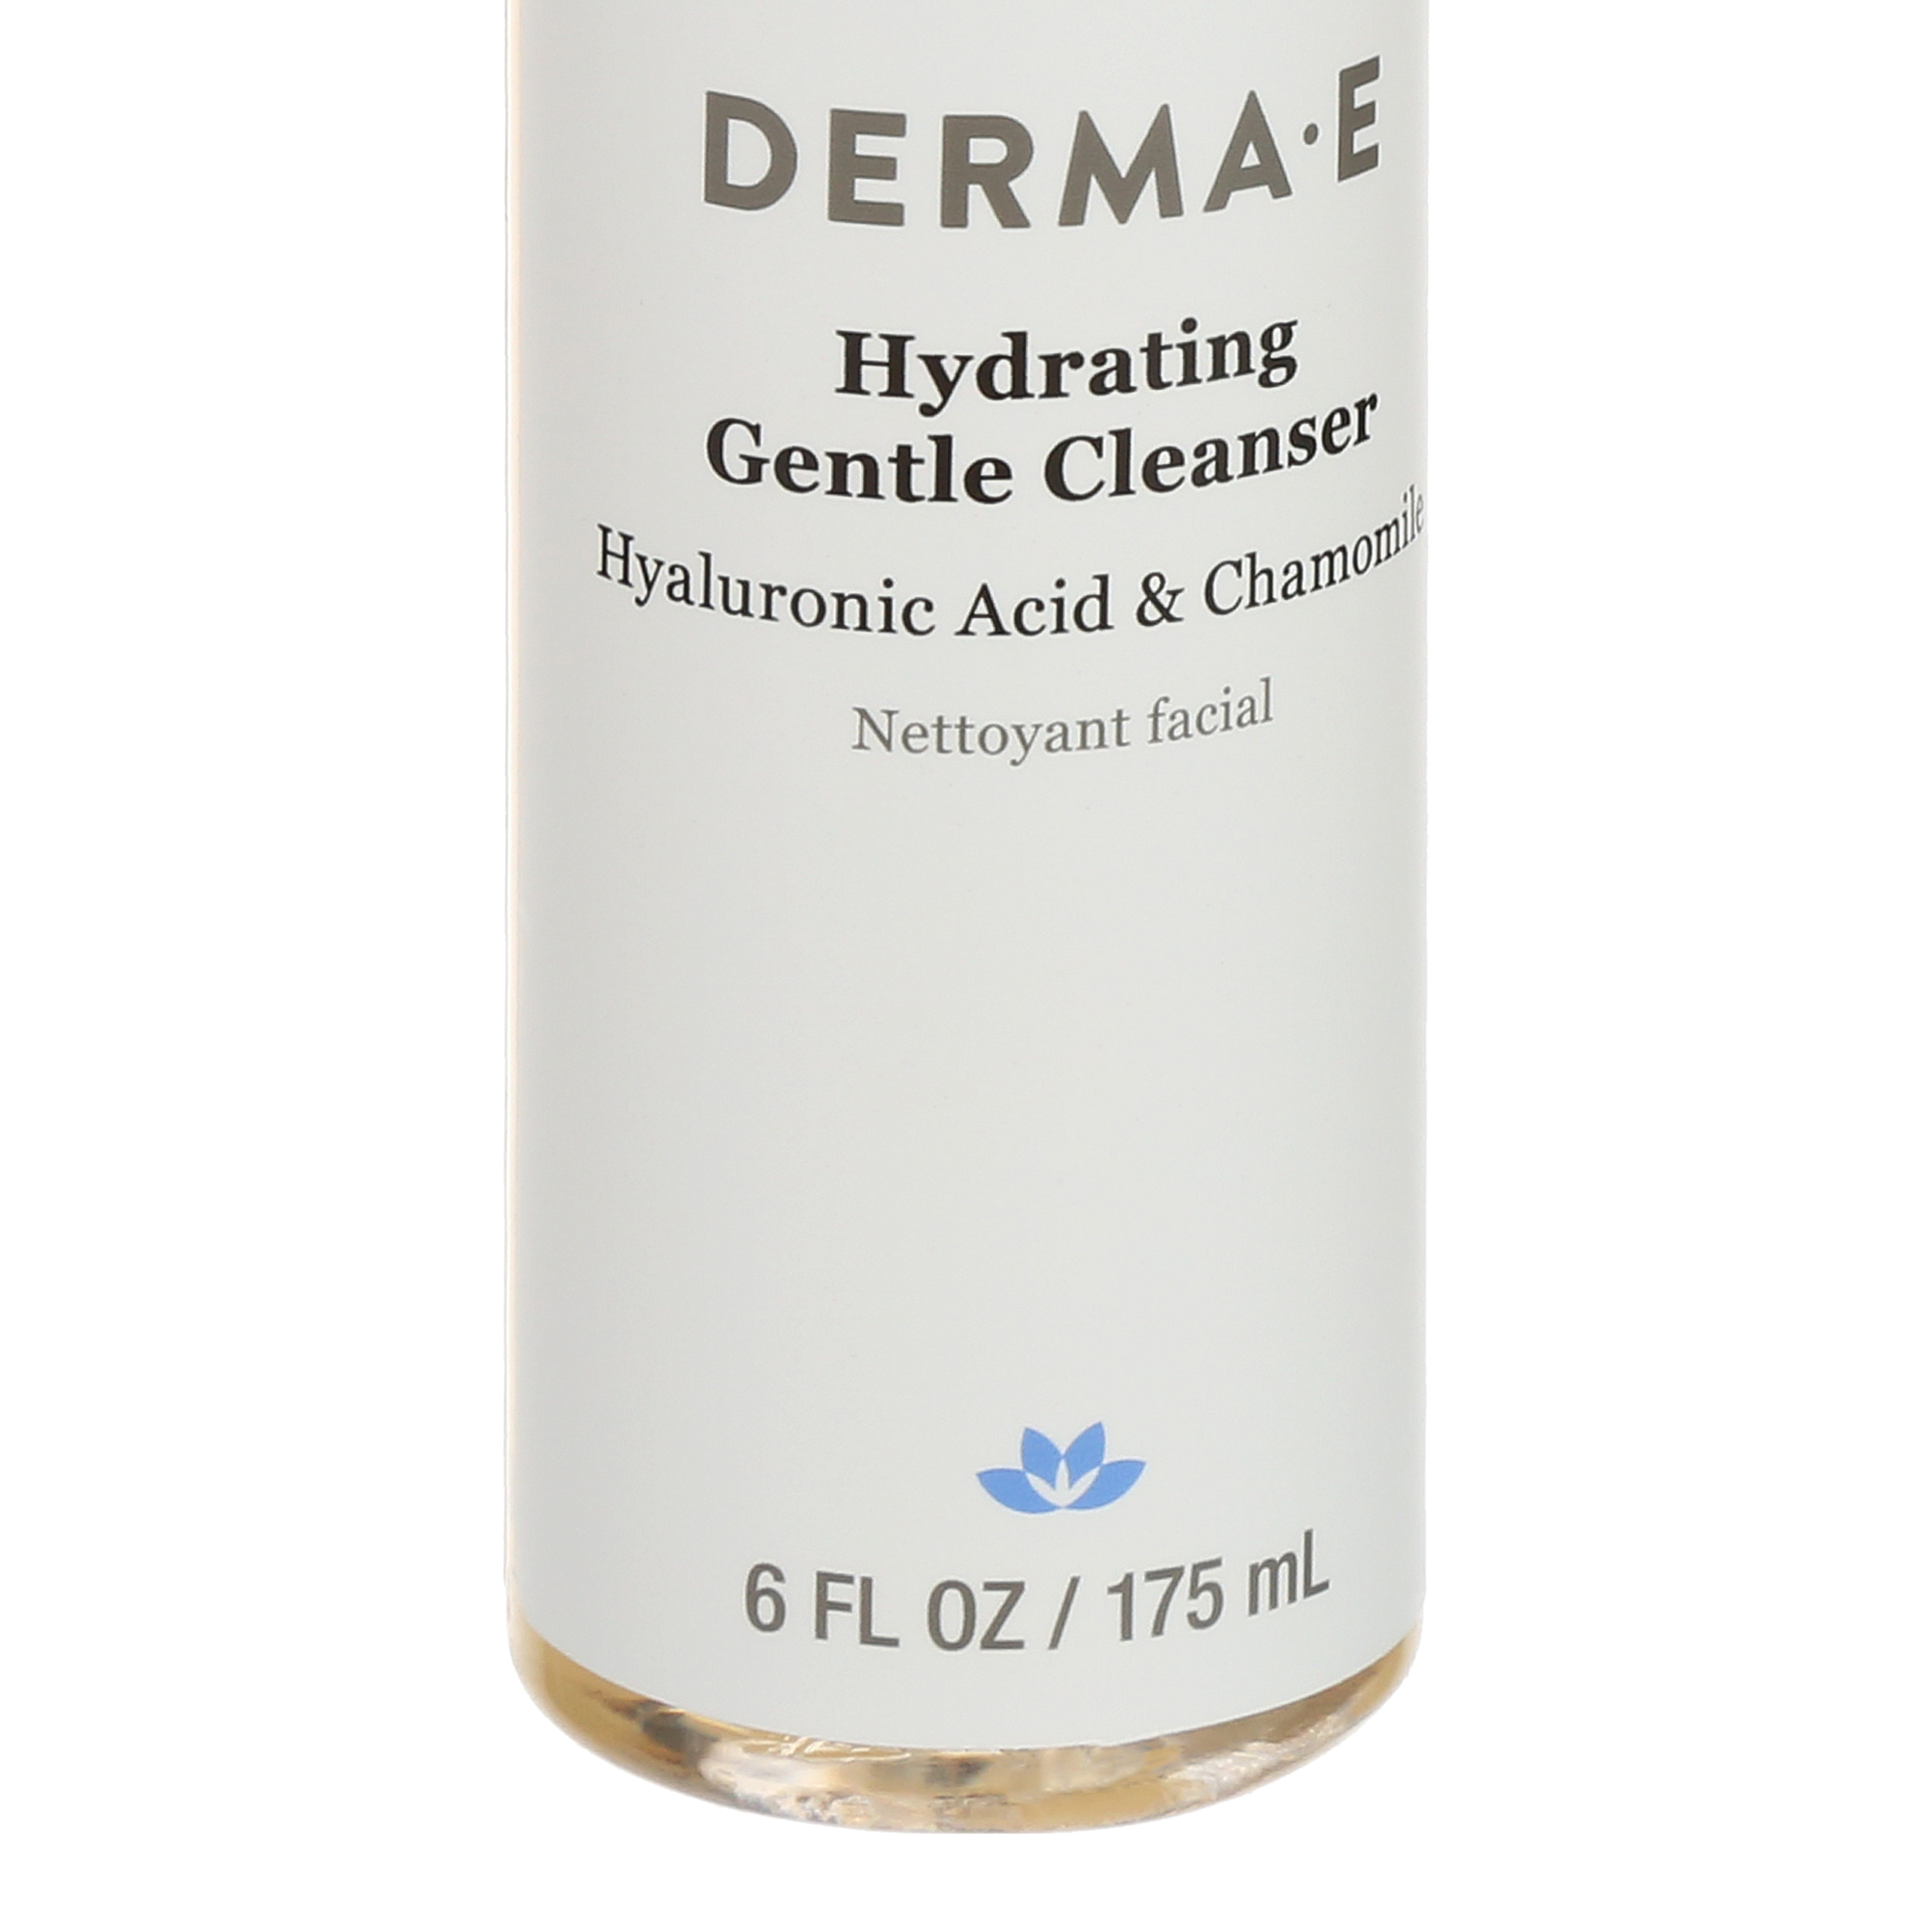 Derma E Hydrating Gentle Cleanser, 6 fl oz - image 5 of 8